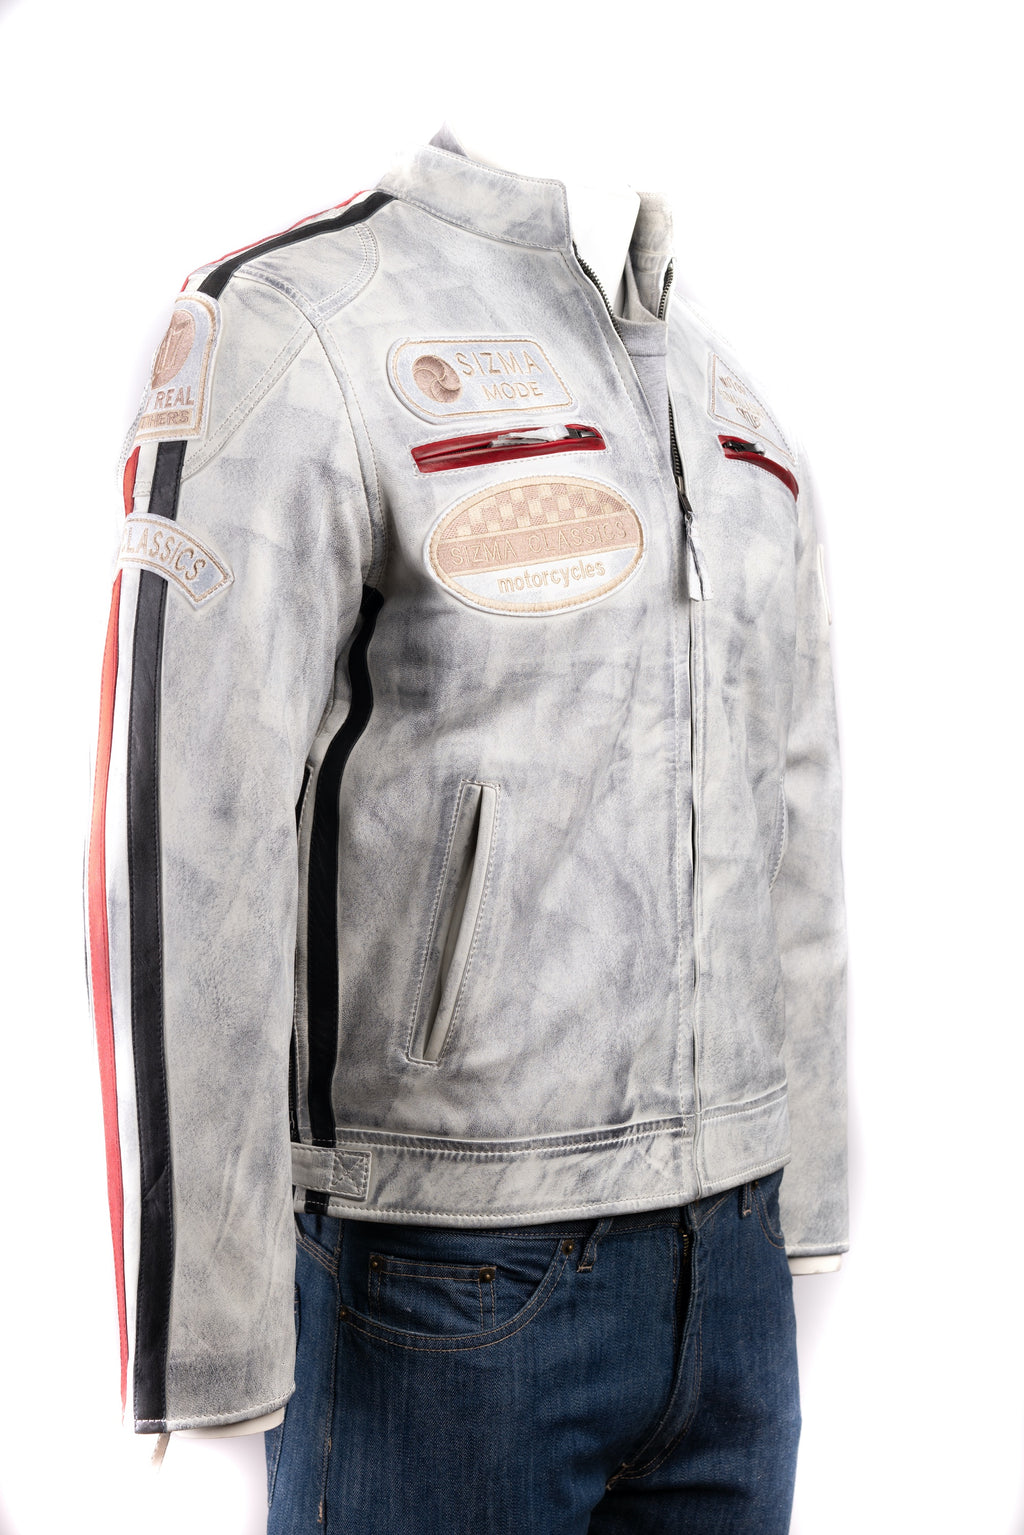 Men's Nappa Racing Biker Style Leather Jacket: Paolo